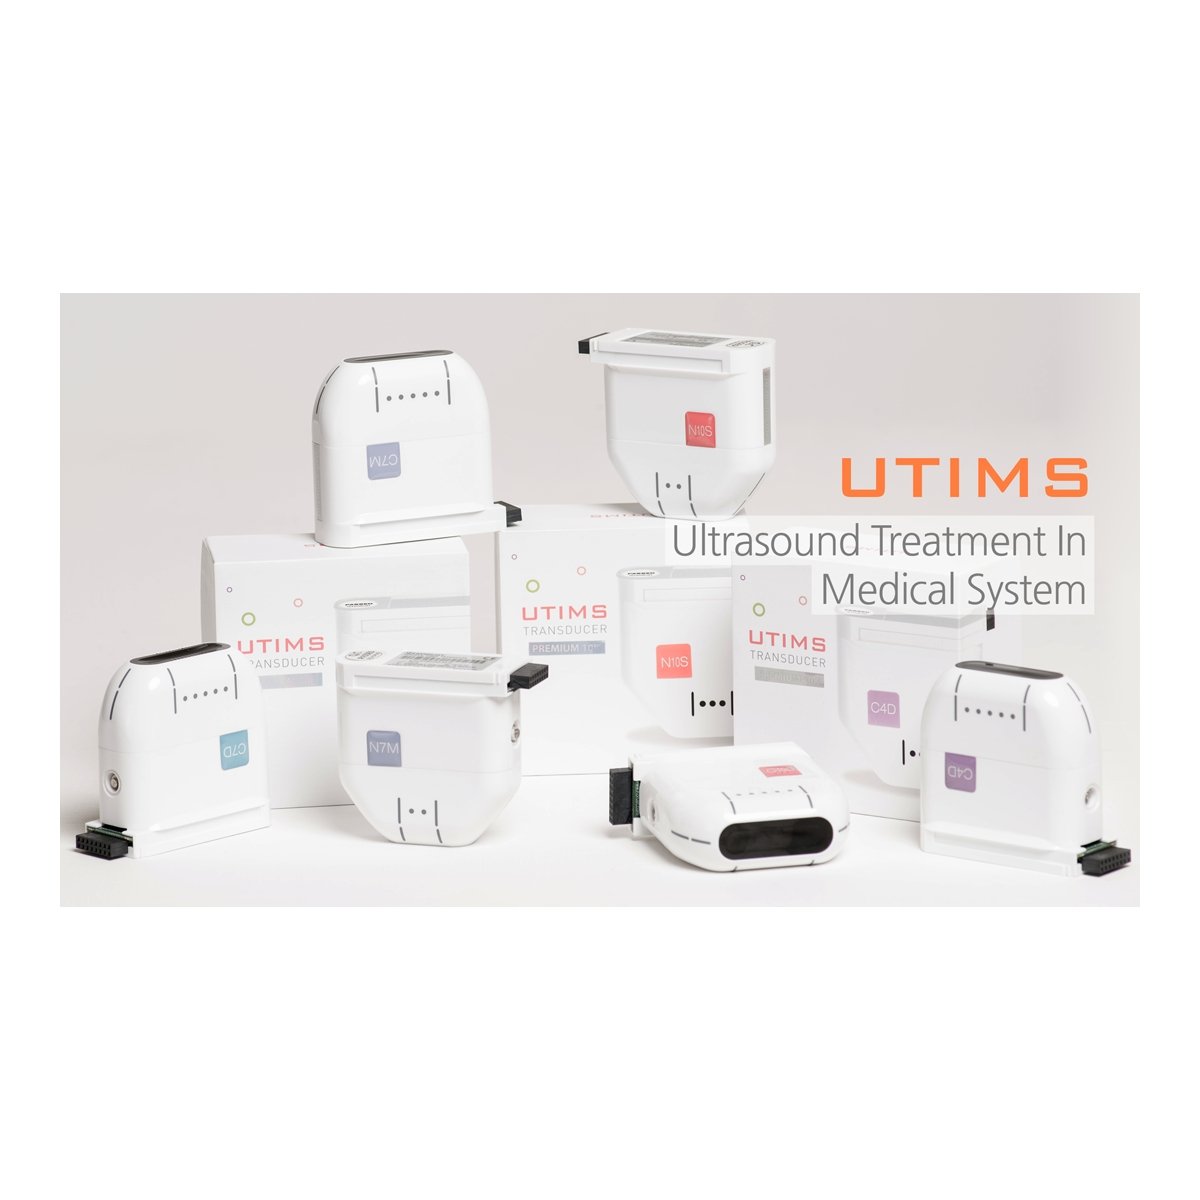 Equipo HIFU de ultrasonido focalizado UTIMS - HIFU - UTIMS